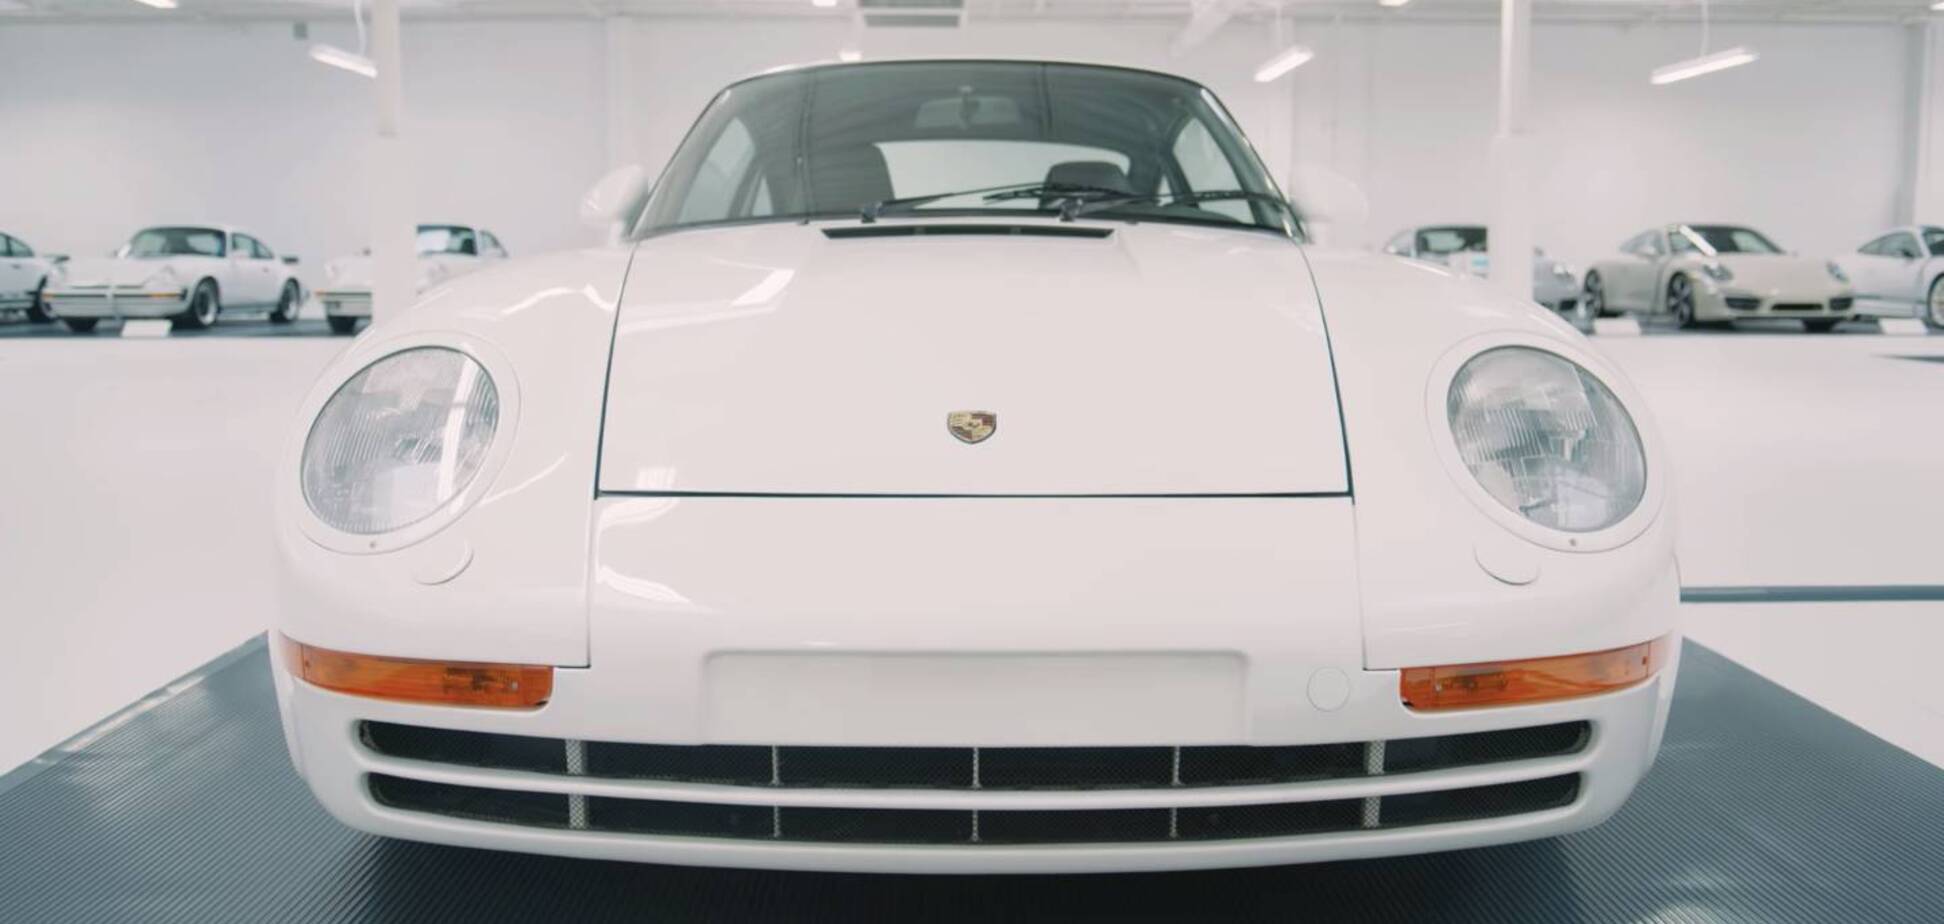 Незвичайне зiбрання Porsche виявили в США